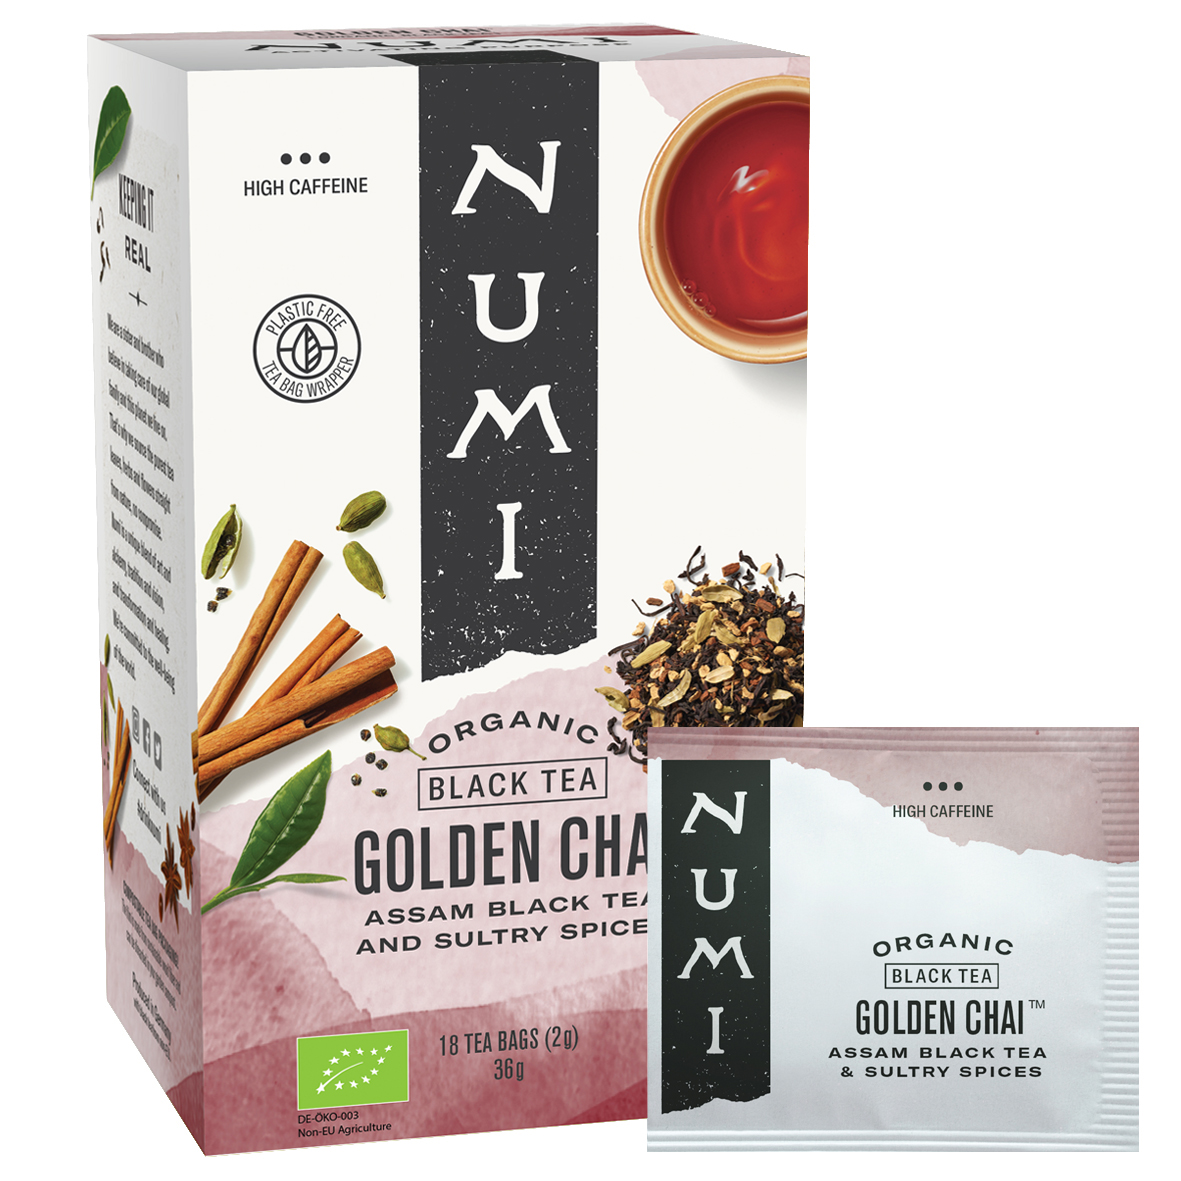 Organic Golden Chai